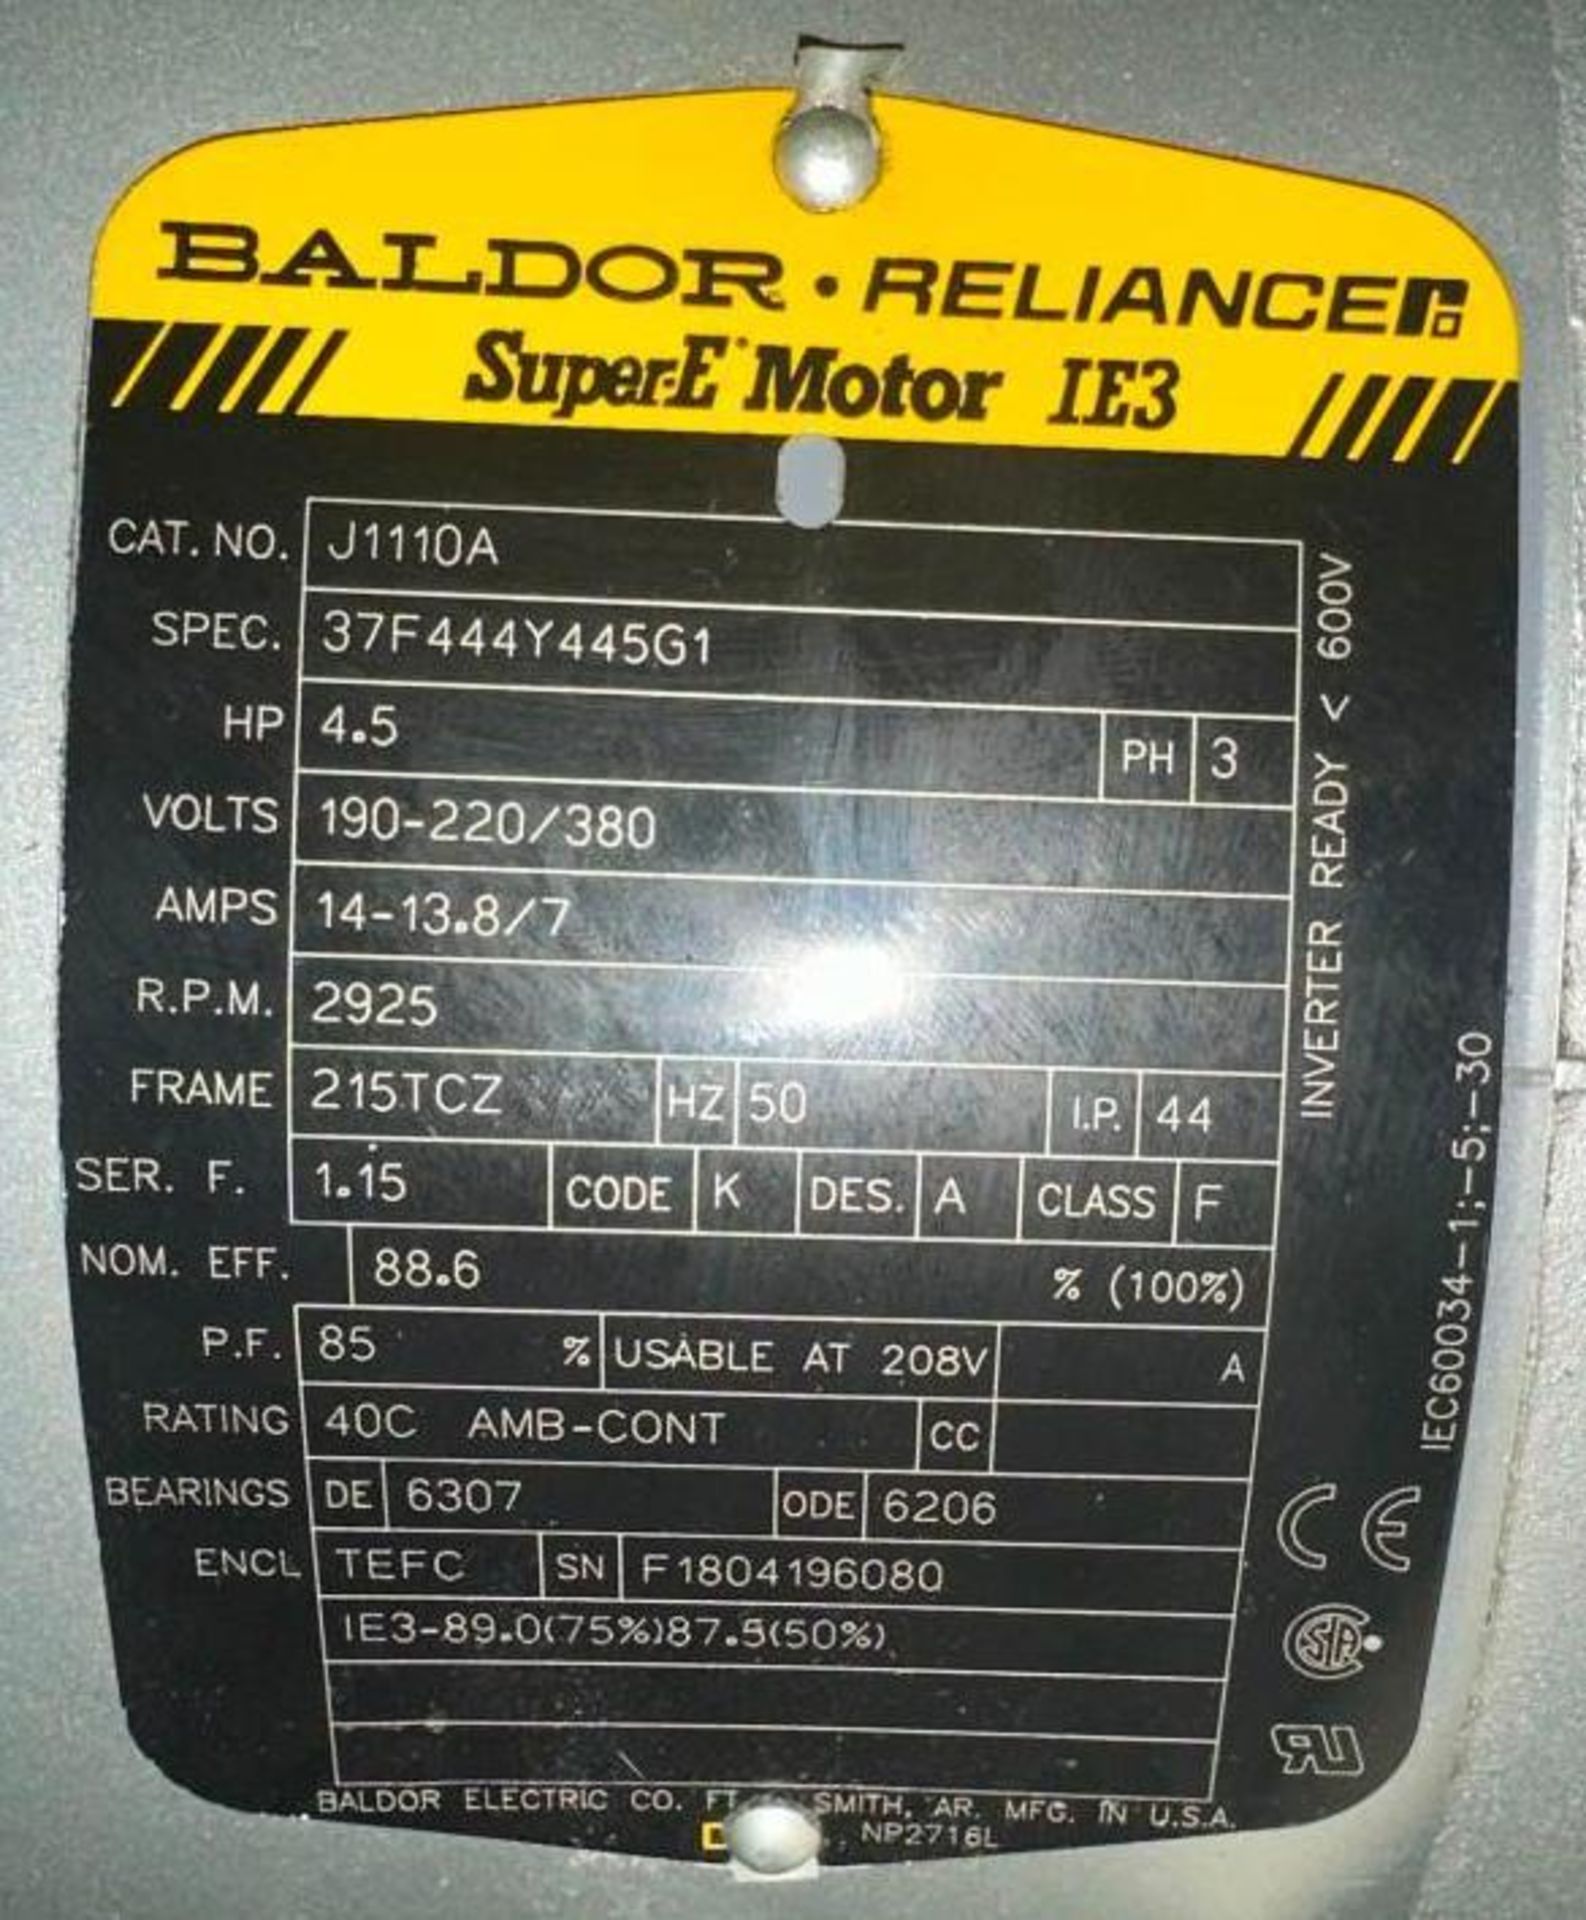 Gast Regenair #R6P355A 3PH, Vacuum Blower w/ Baldor #J1110A / Spec. 37F444Y445G1 SuperE Motor - Image 7 of 7